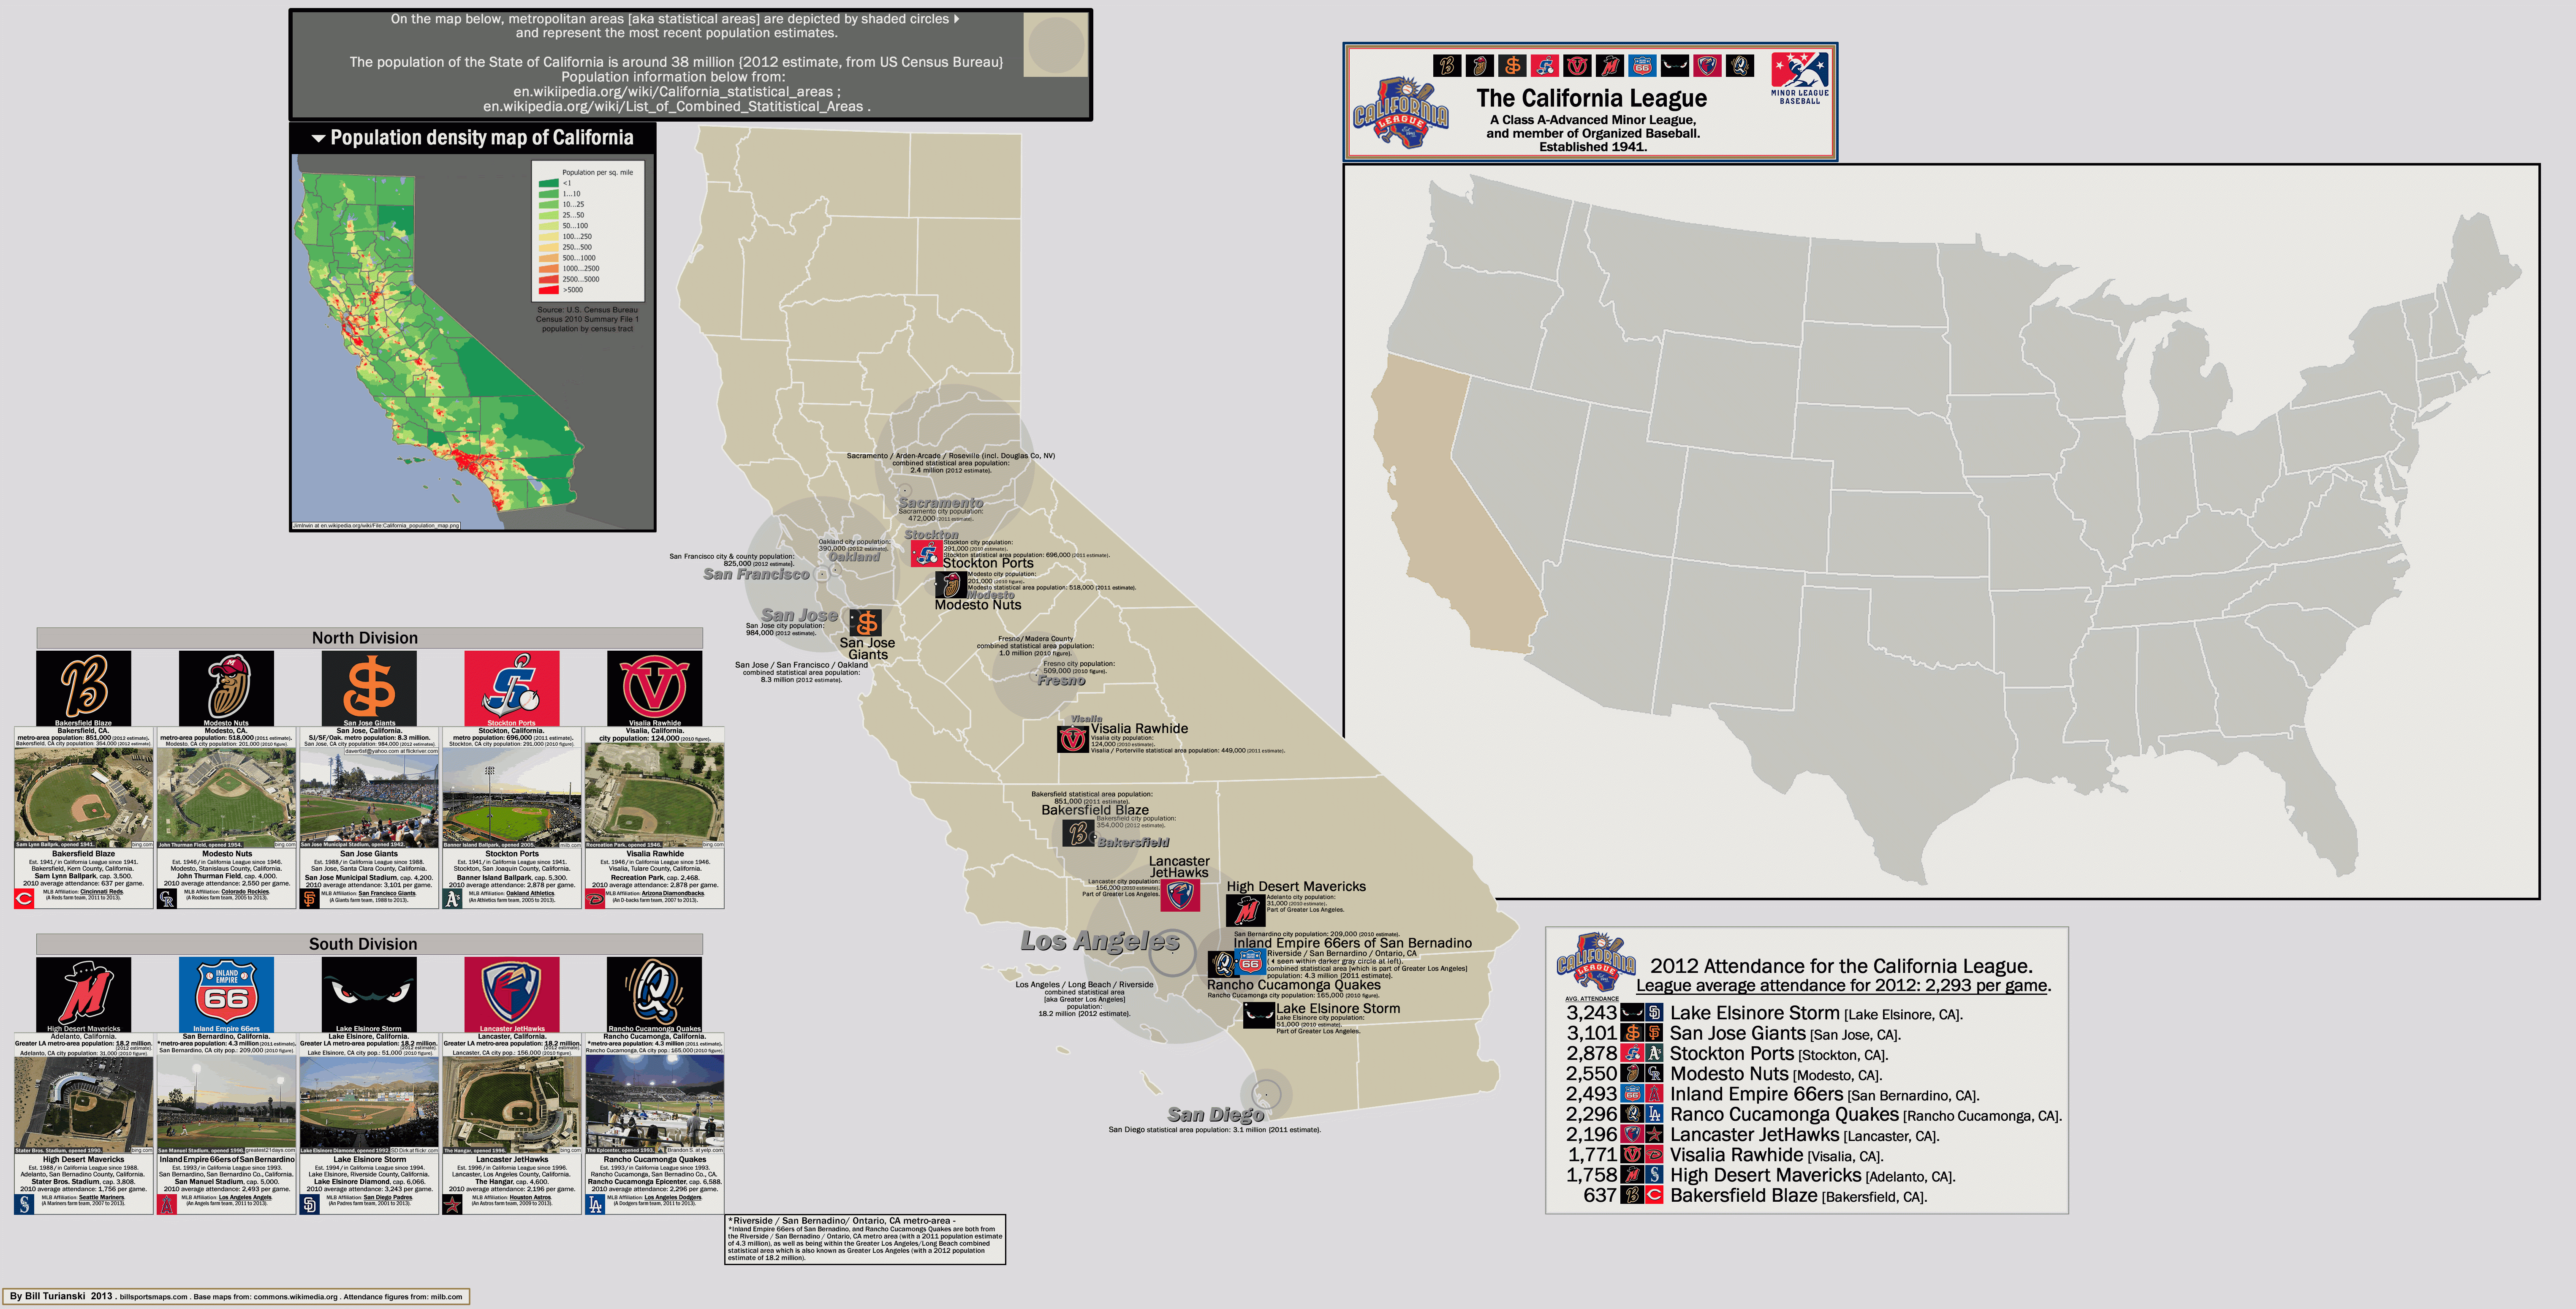 Minor League Baseball: The California League (Class A-Advanced - California Baseball Teams Map